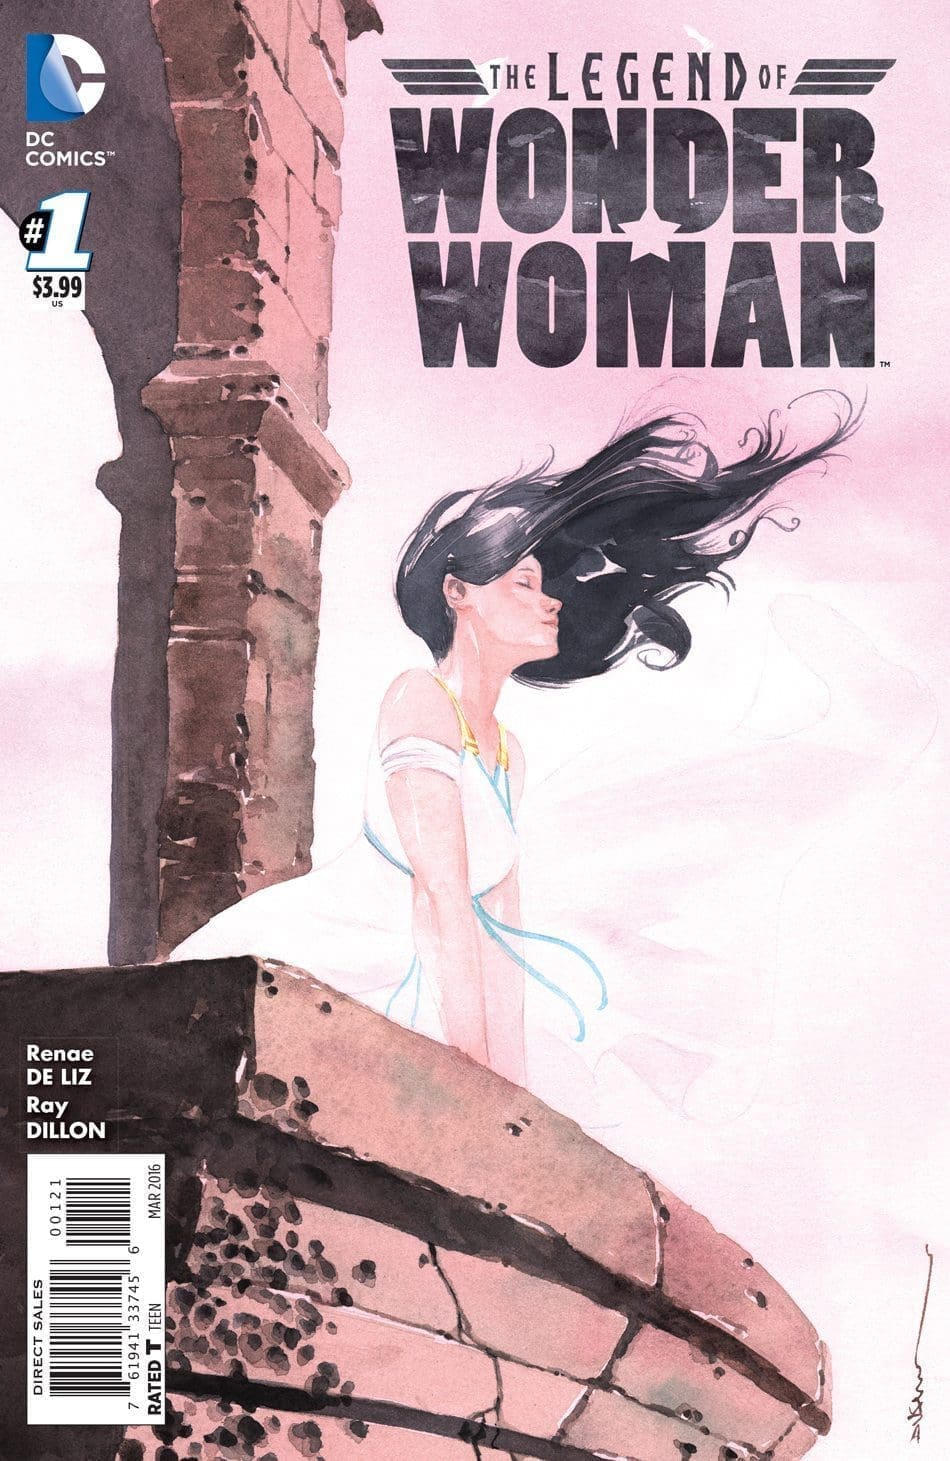 comic review, comics, dc comics, wonder woman